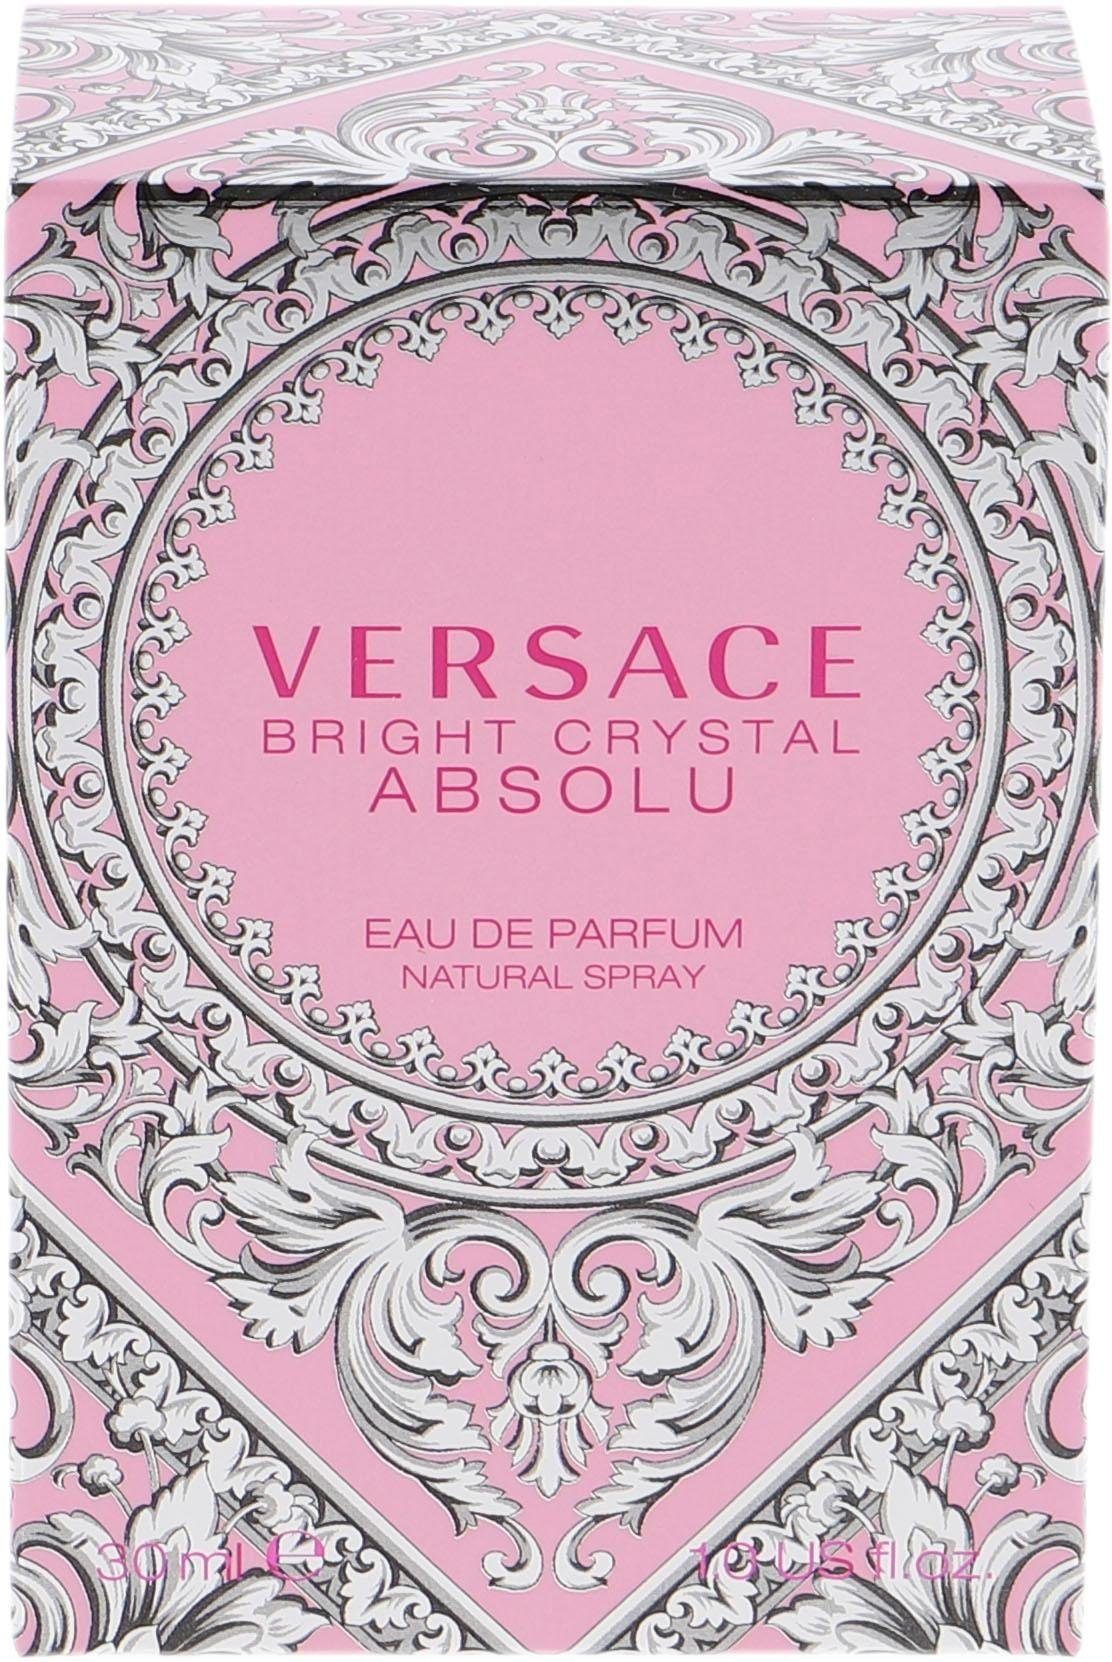 Absolu Versace Eau Versace Parfum de Crystal Bright